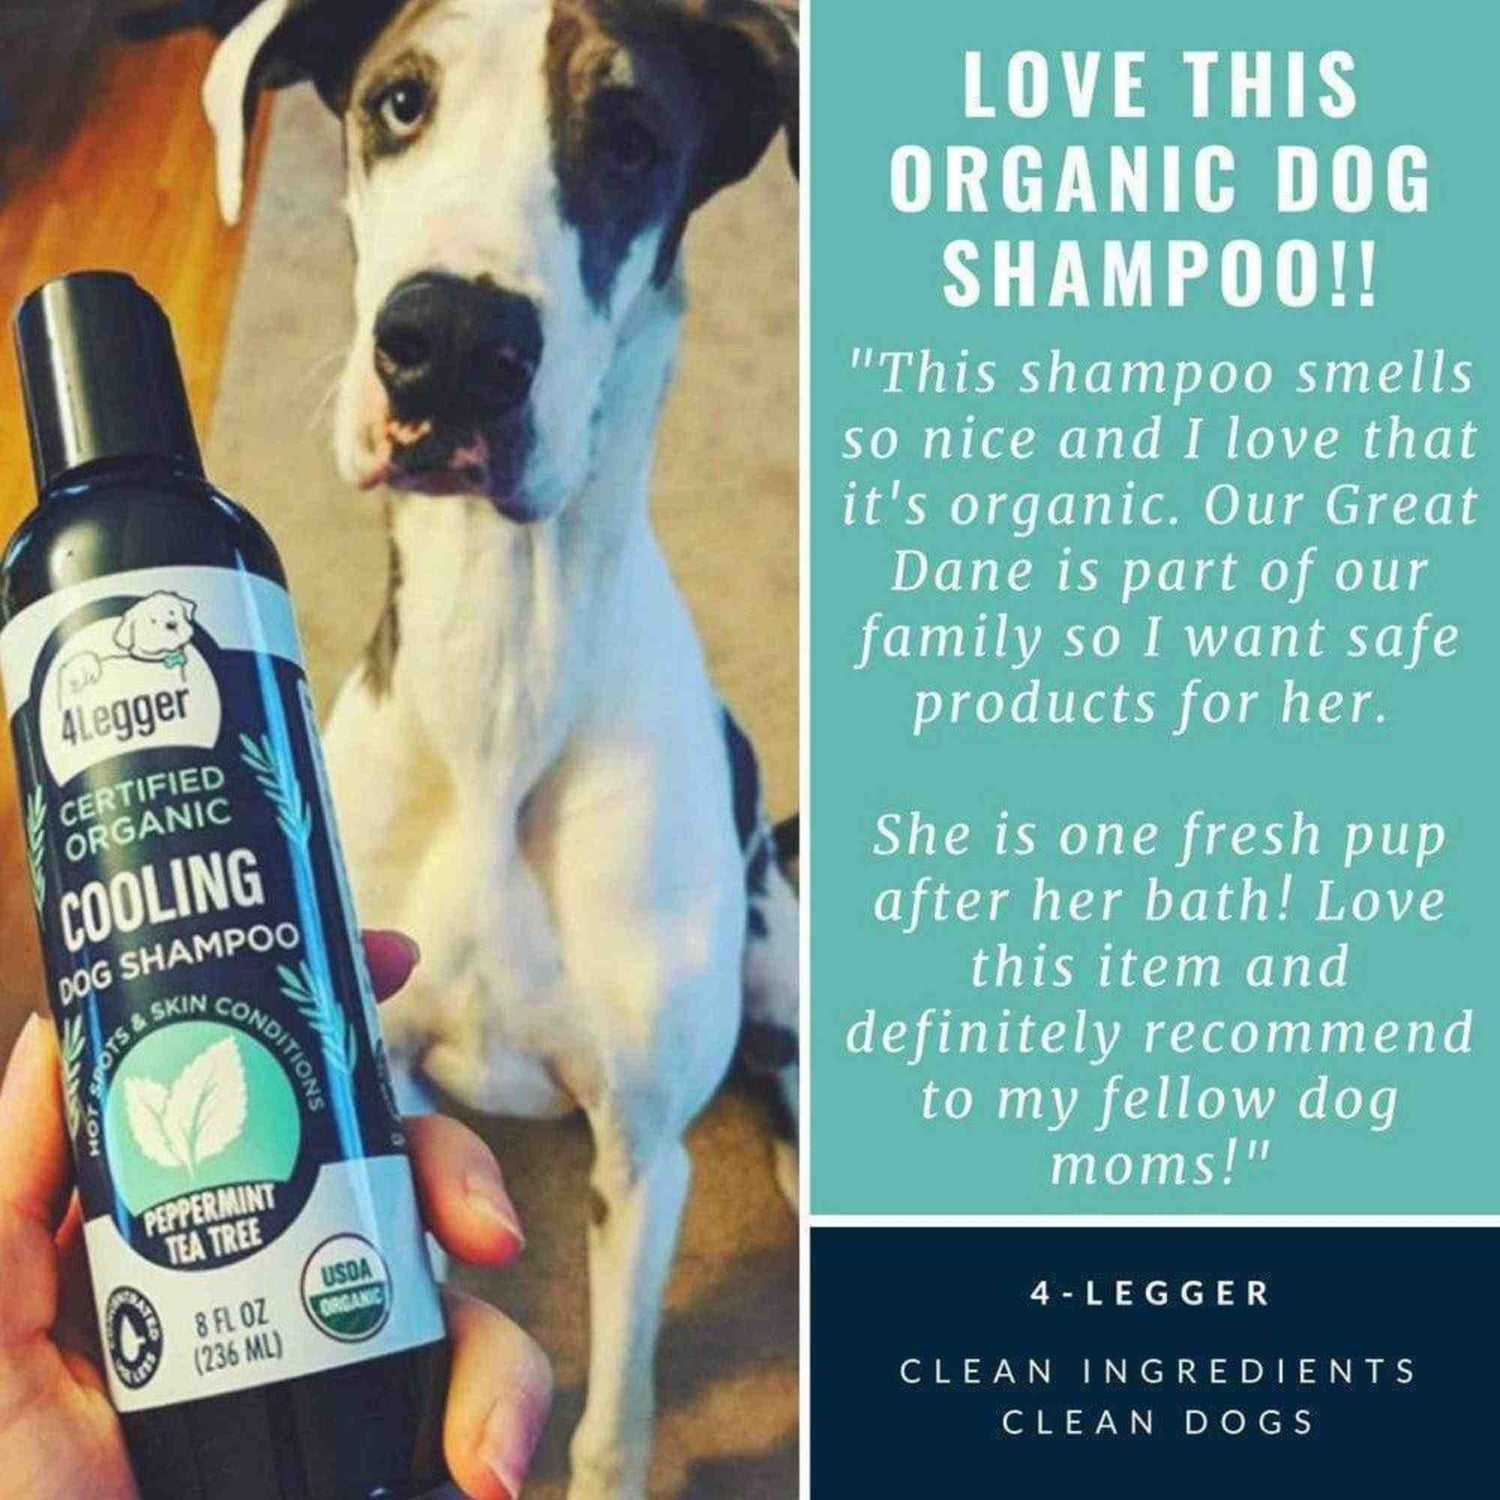 4-legger-usda-certified-organic-dog-shampoo-cooling-organic-tea-tree-oil-dog-shampoo-with-peppermint-testimonial